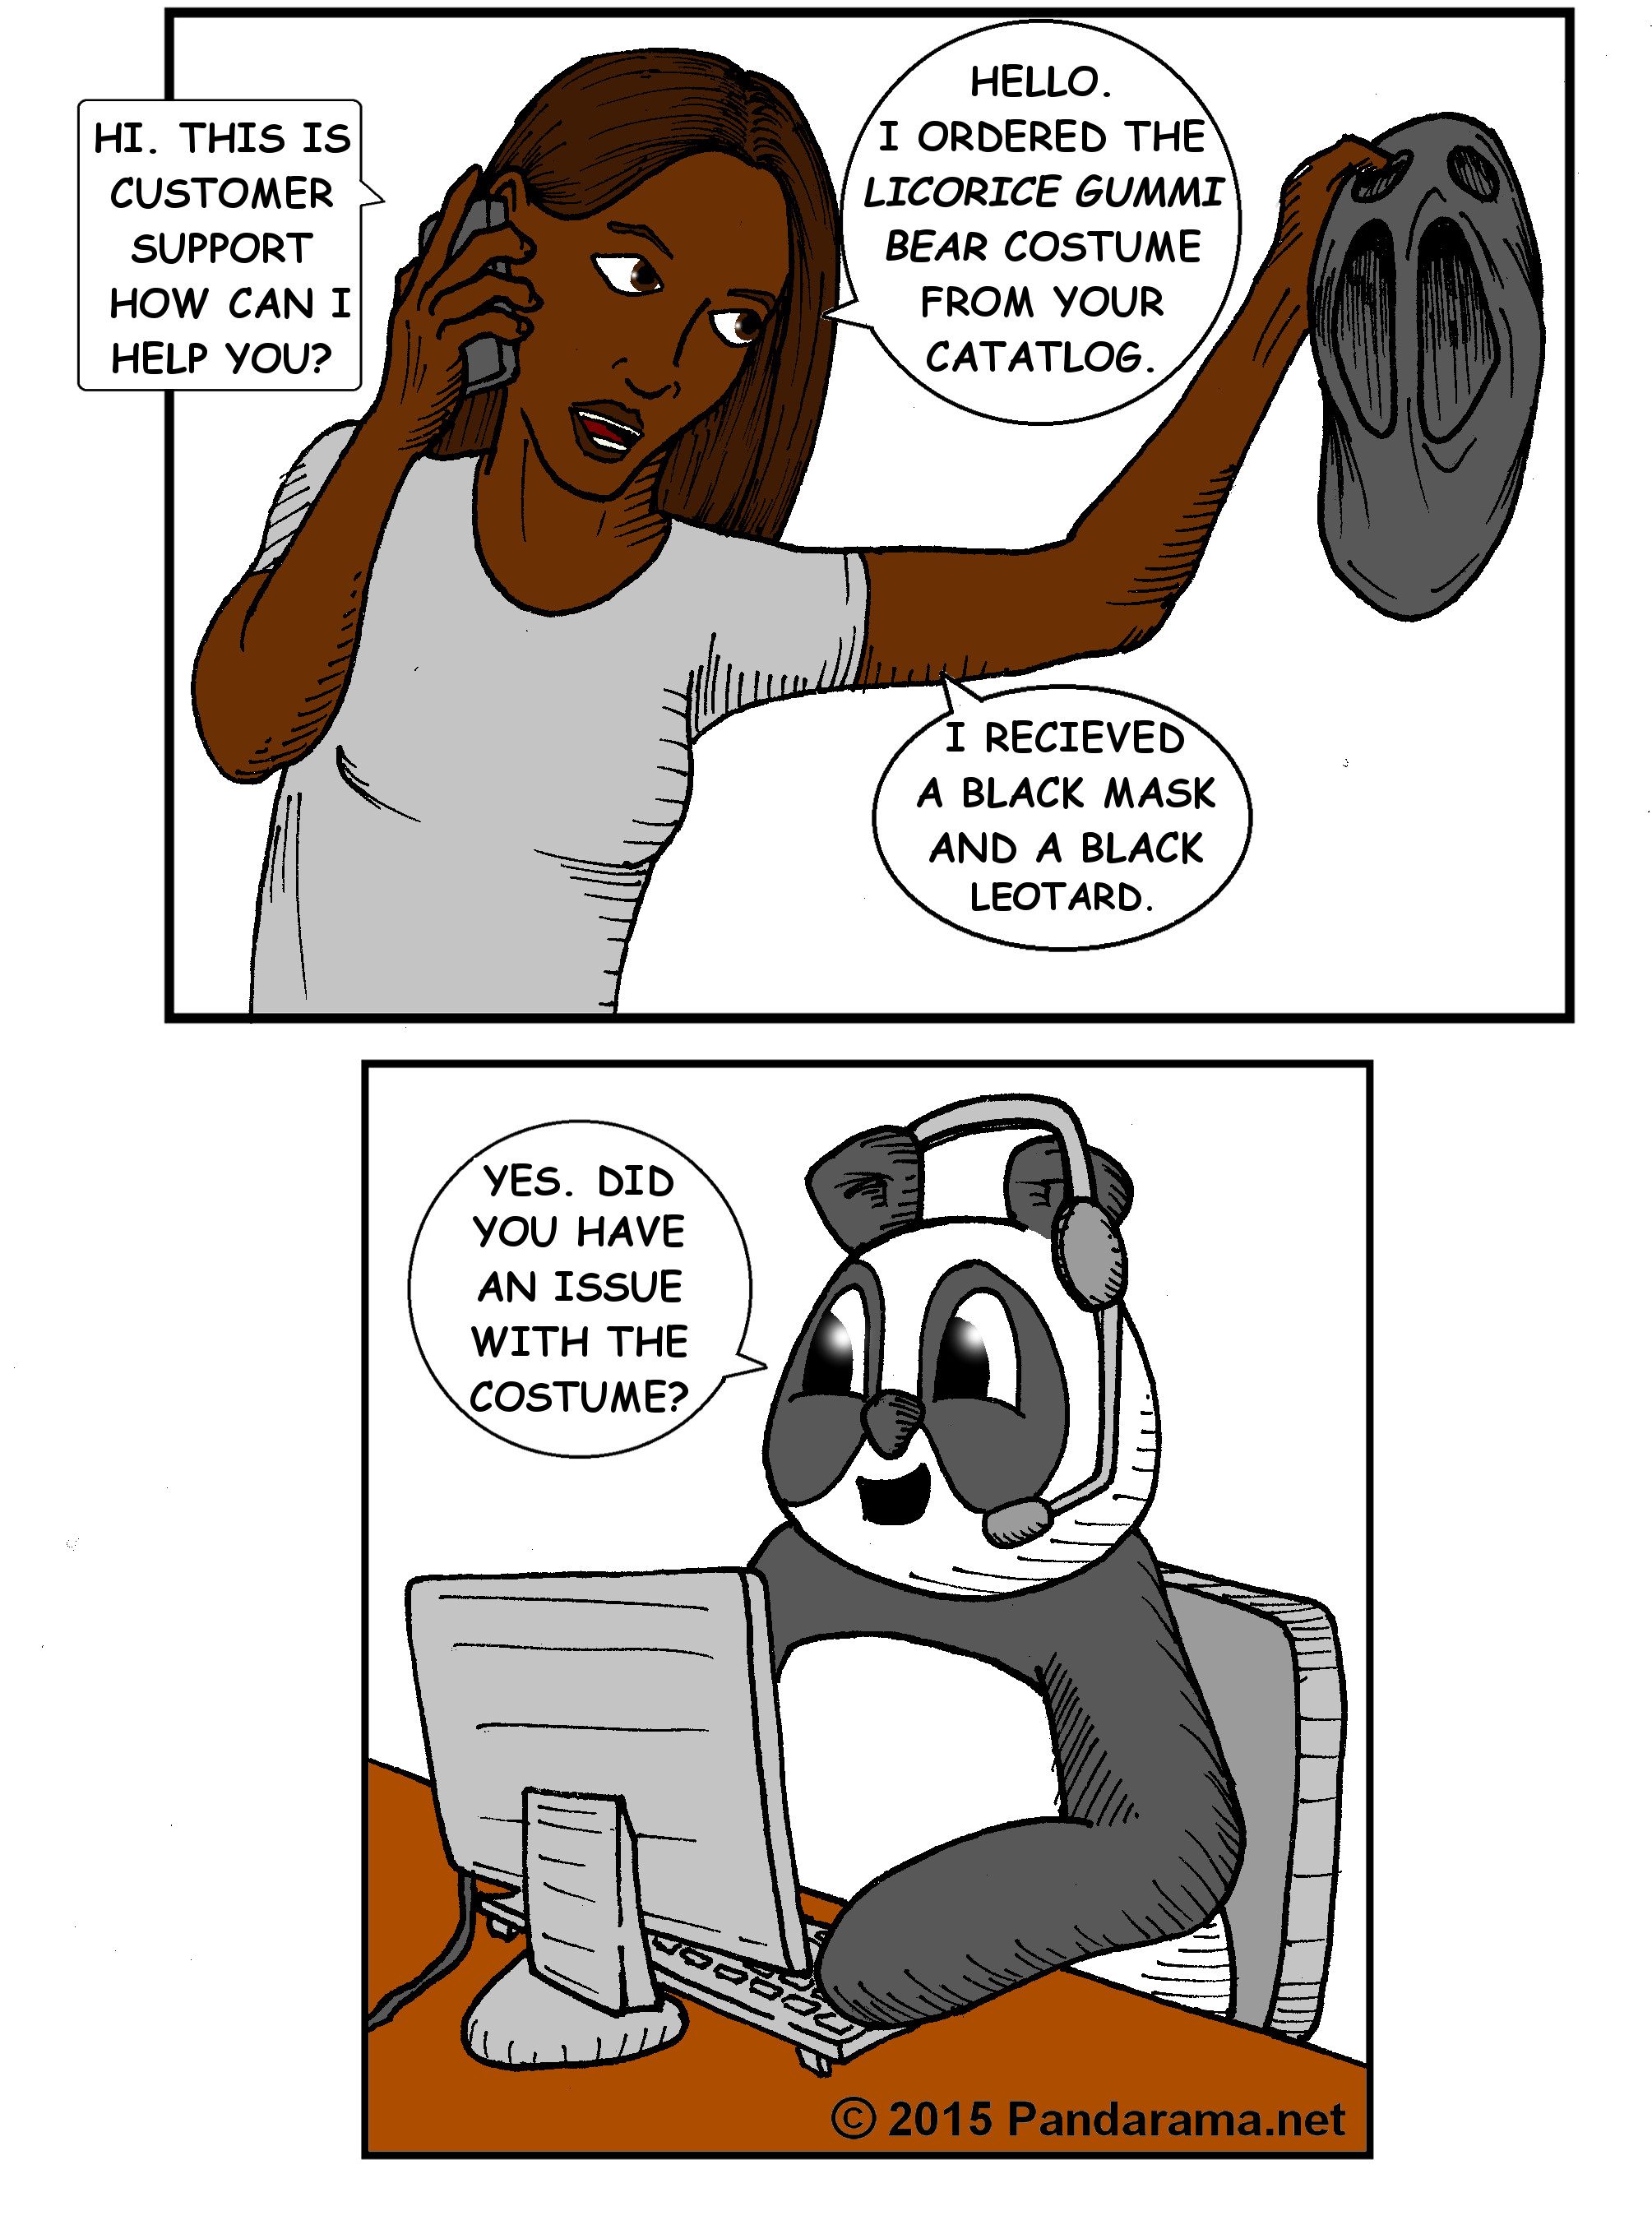 Pandarama Pandarama.net cartoon of a panda fielding a customer service call about a licorice gummibear costume.